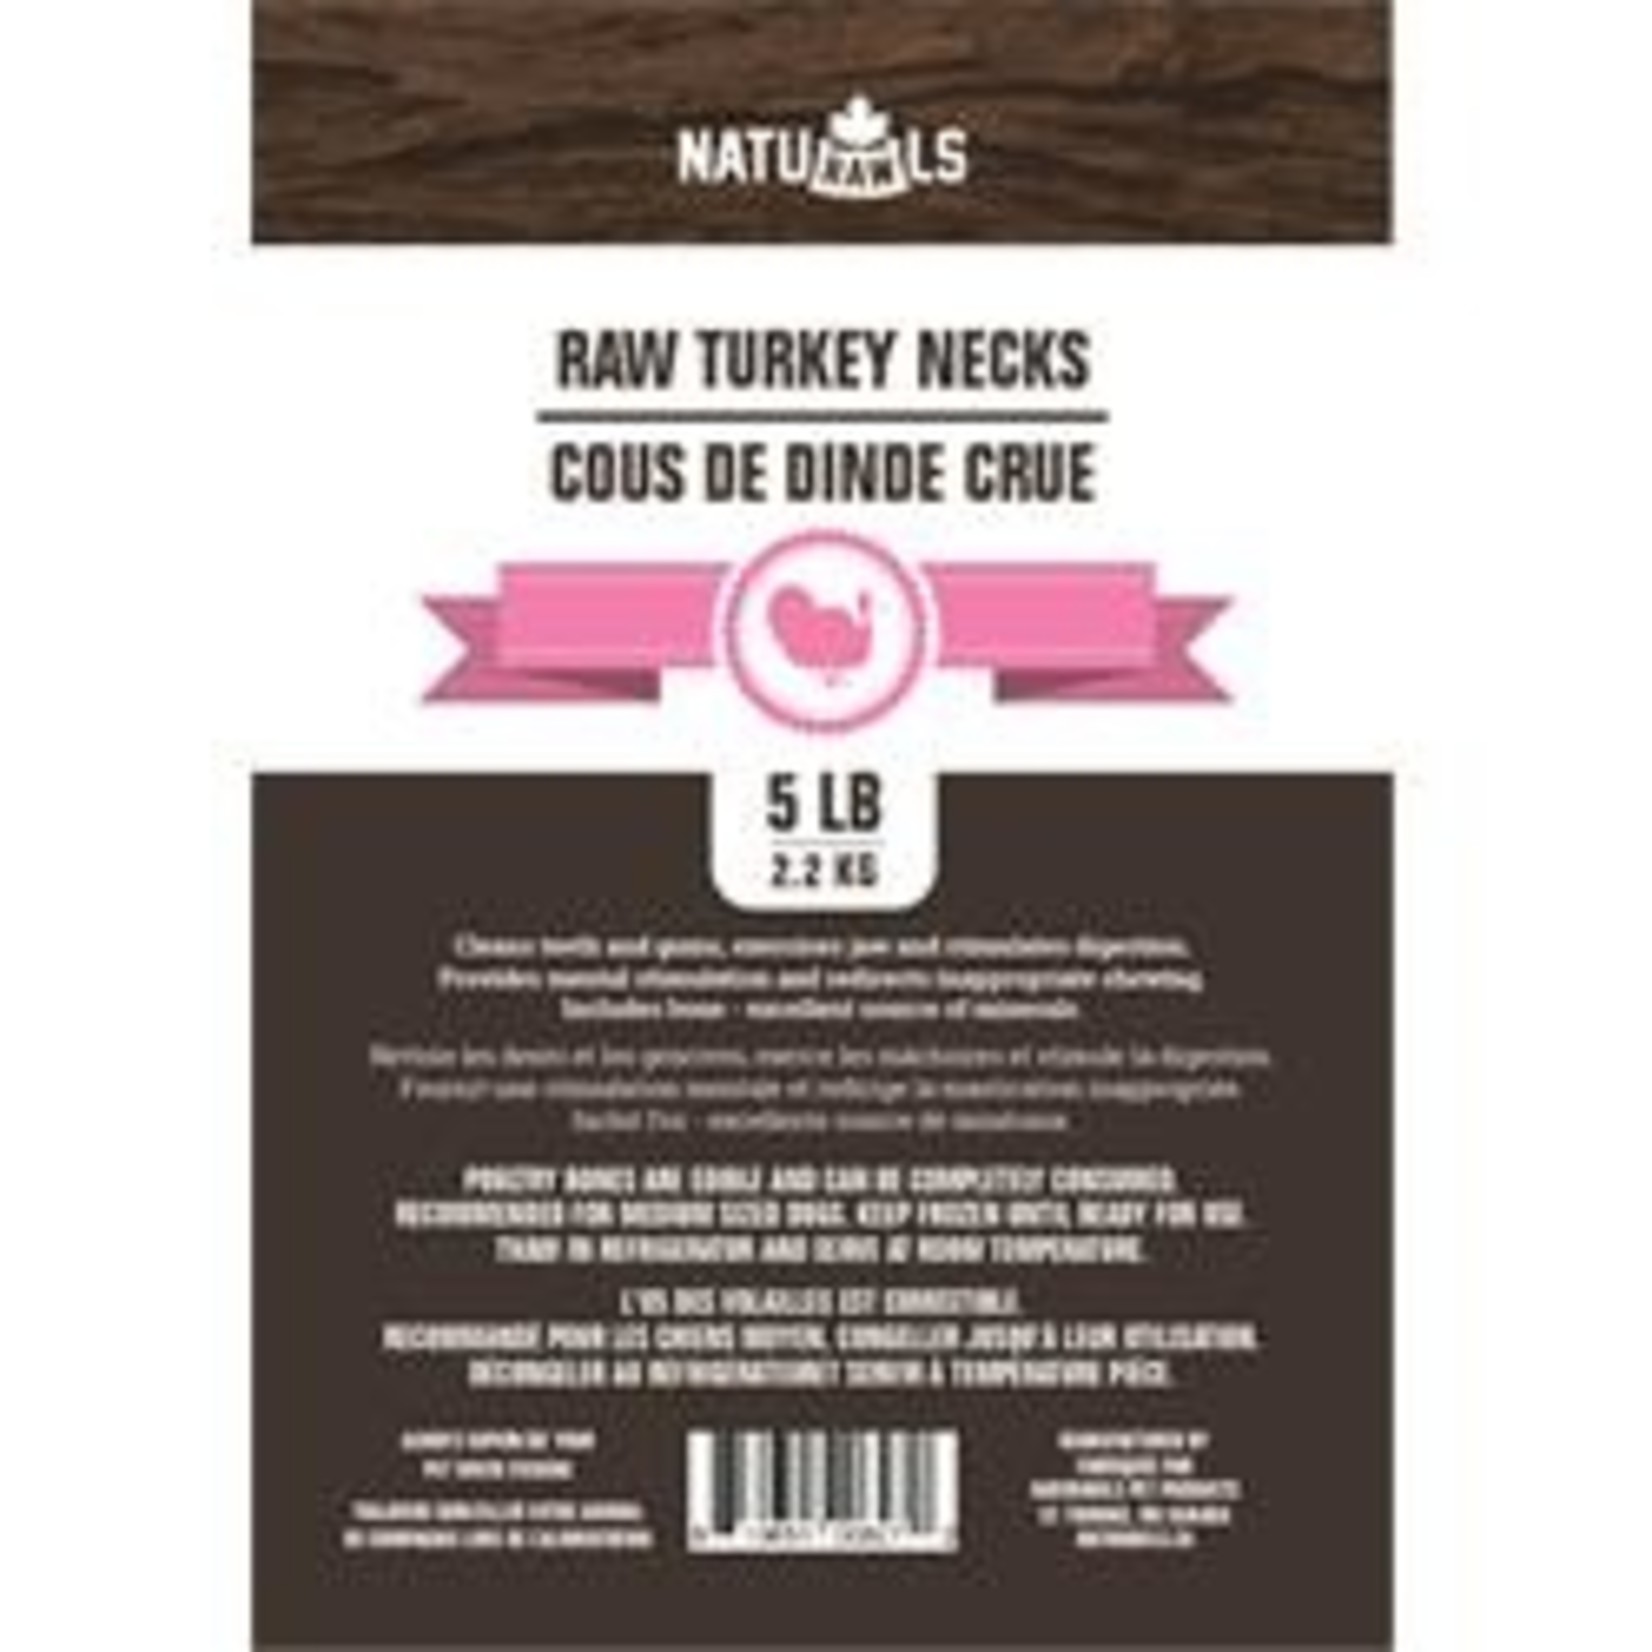 NatuRAWls NatuRAWls - Frozen Raw Turkey Necks